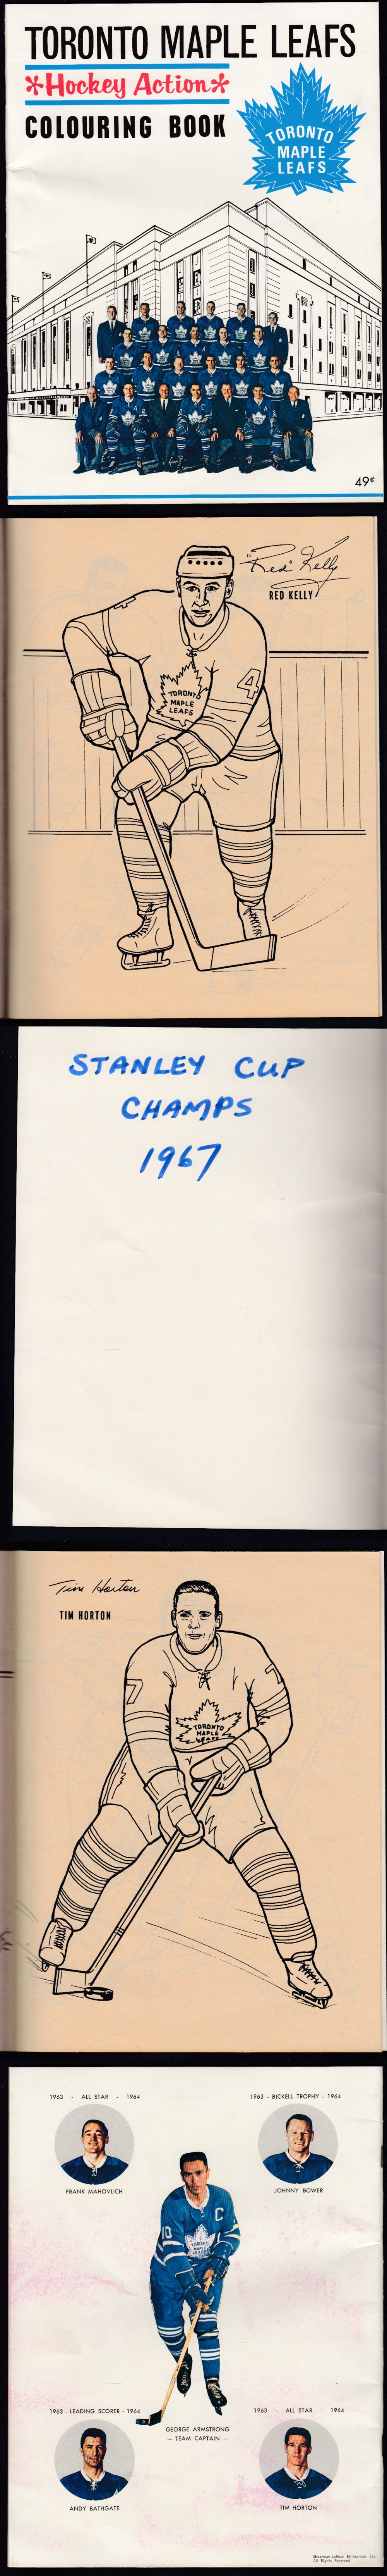 1964 TORONTO MAPLE LEAFS COLOURING BOOK photo